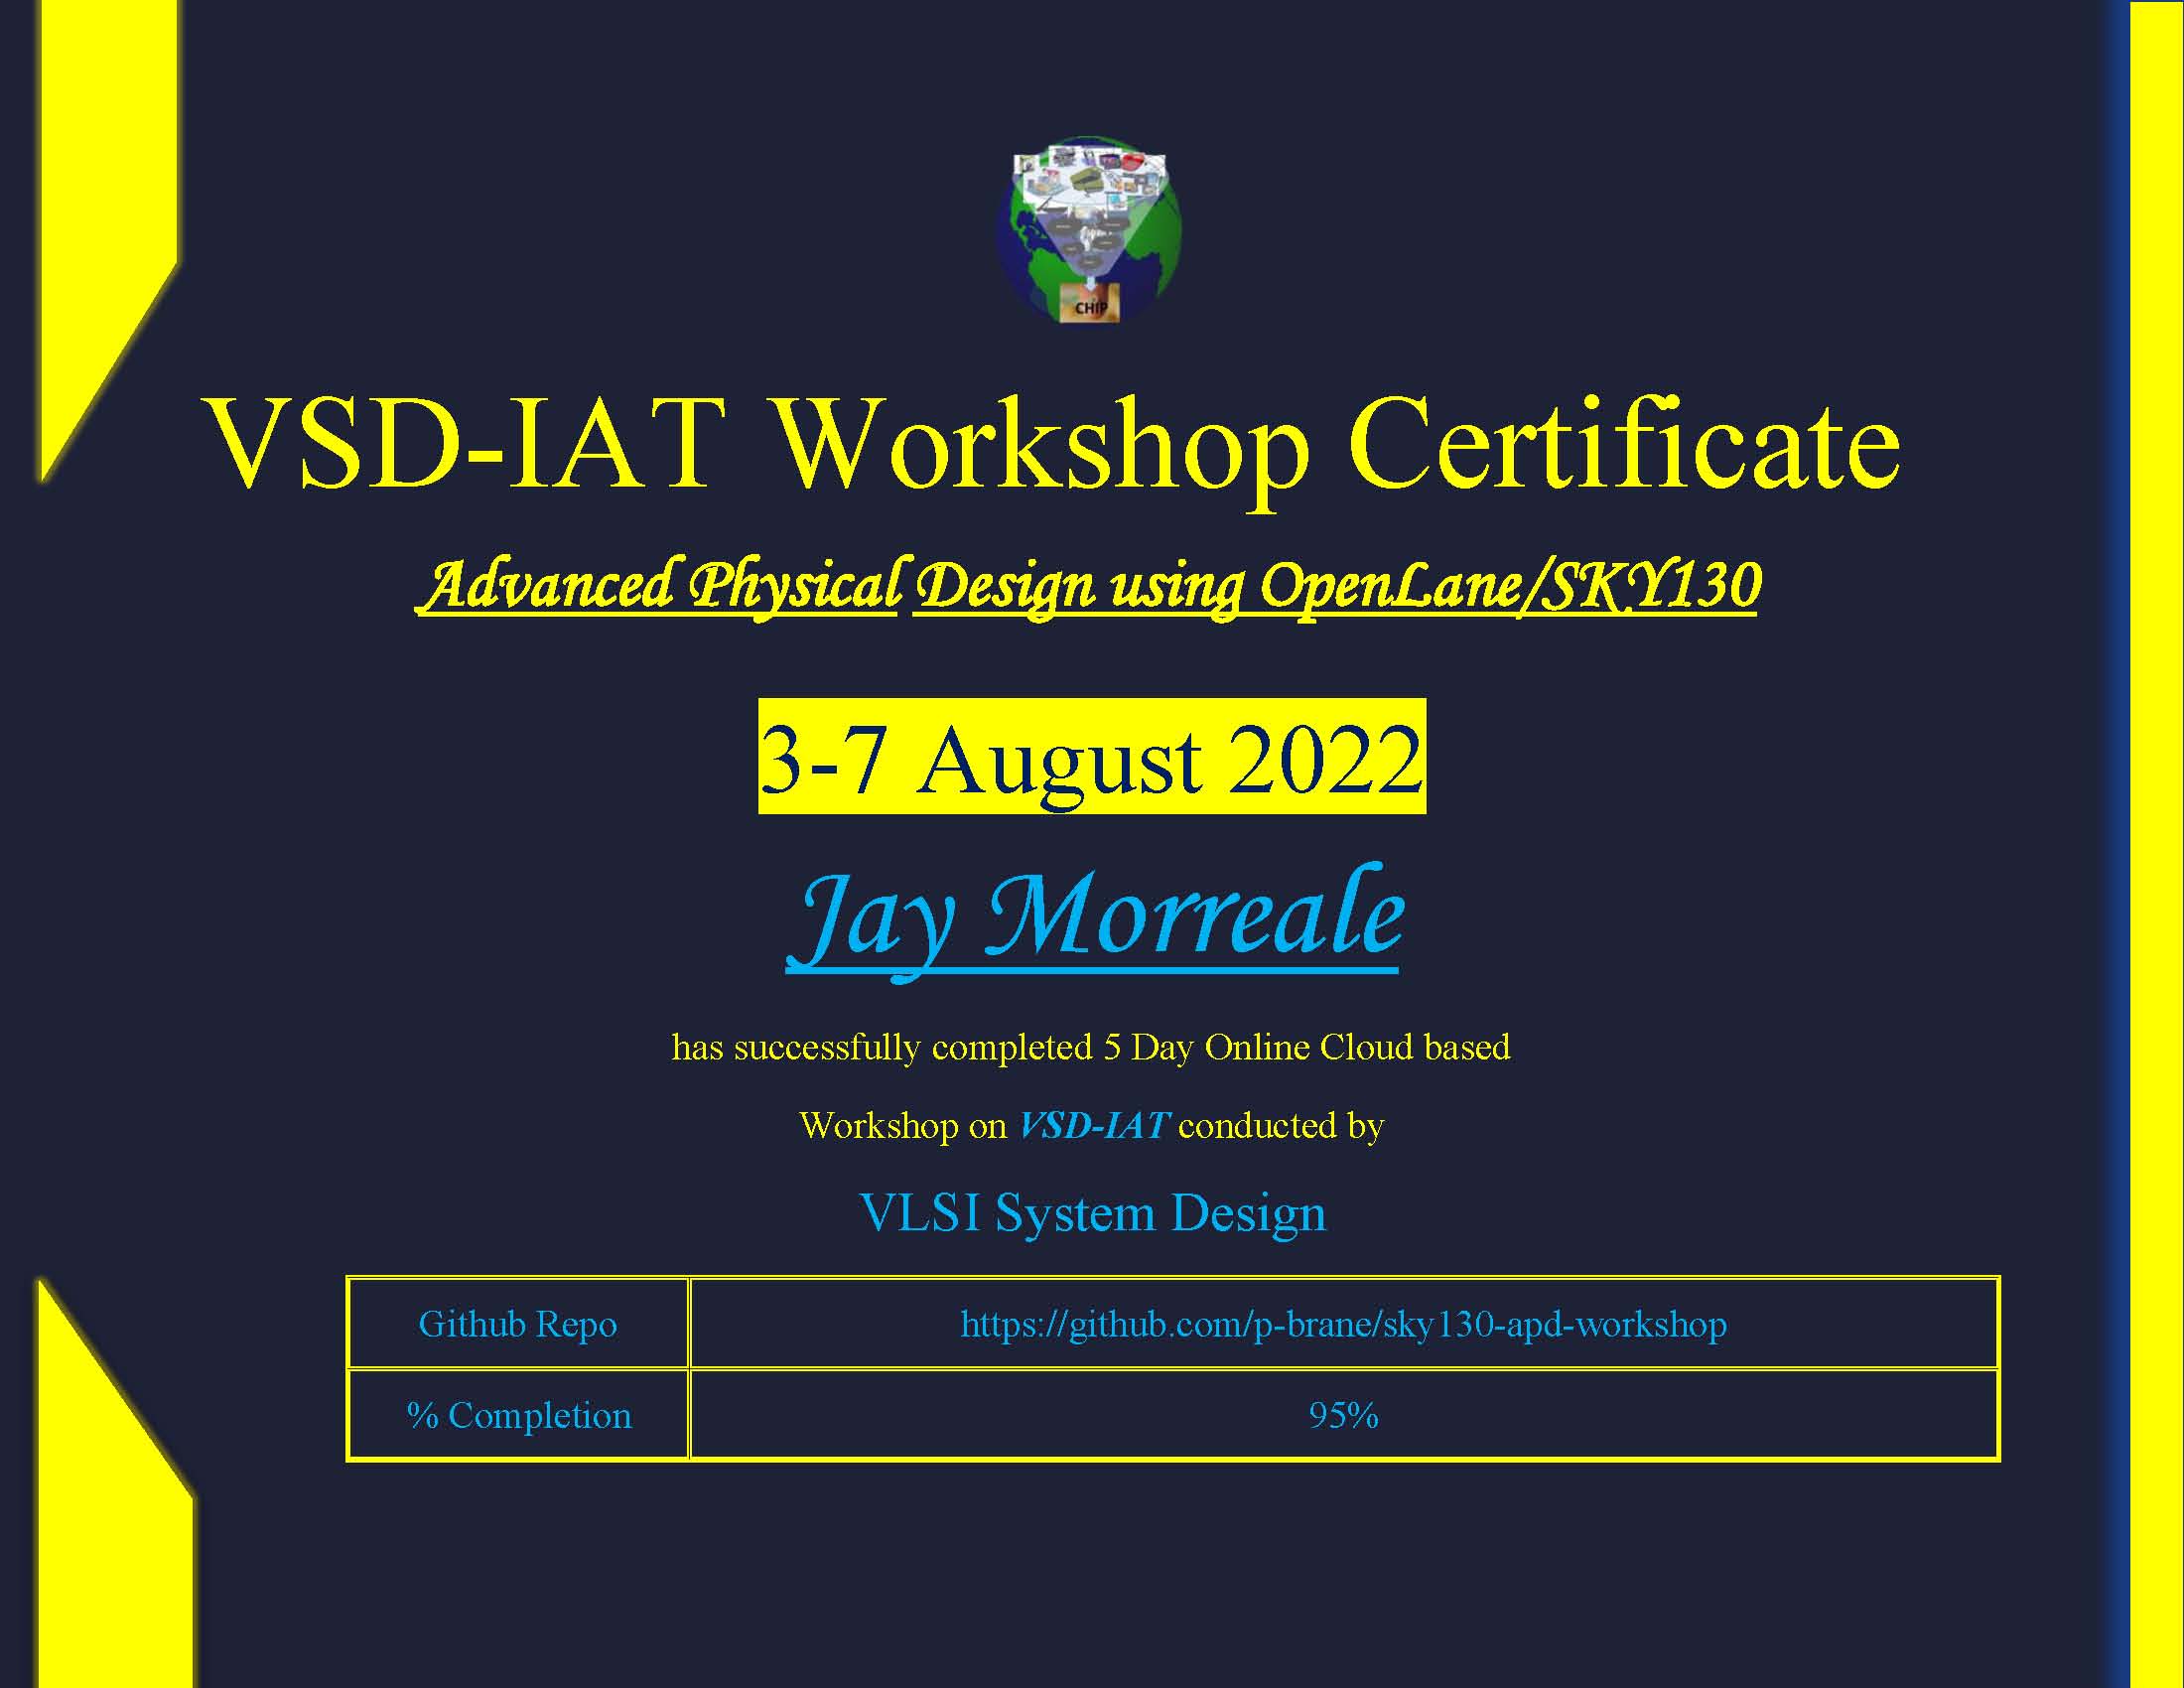 sky130 APD Workshop Certificate of Completion